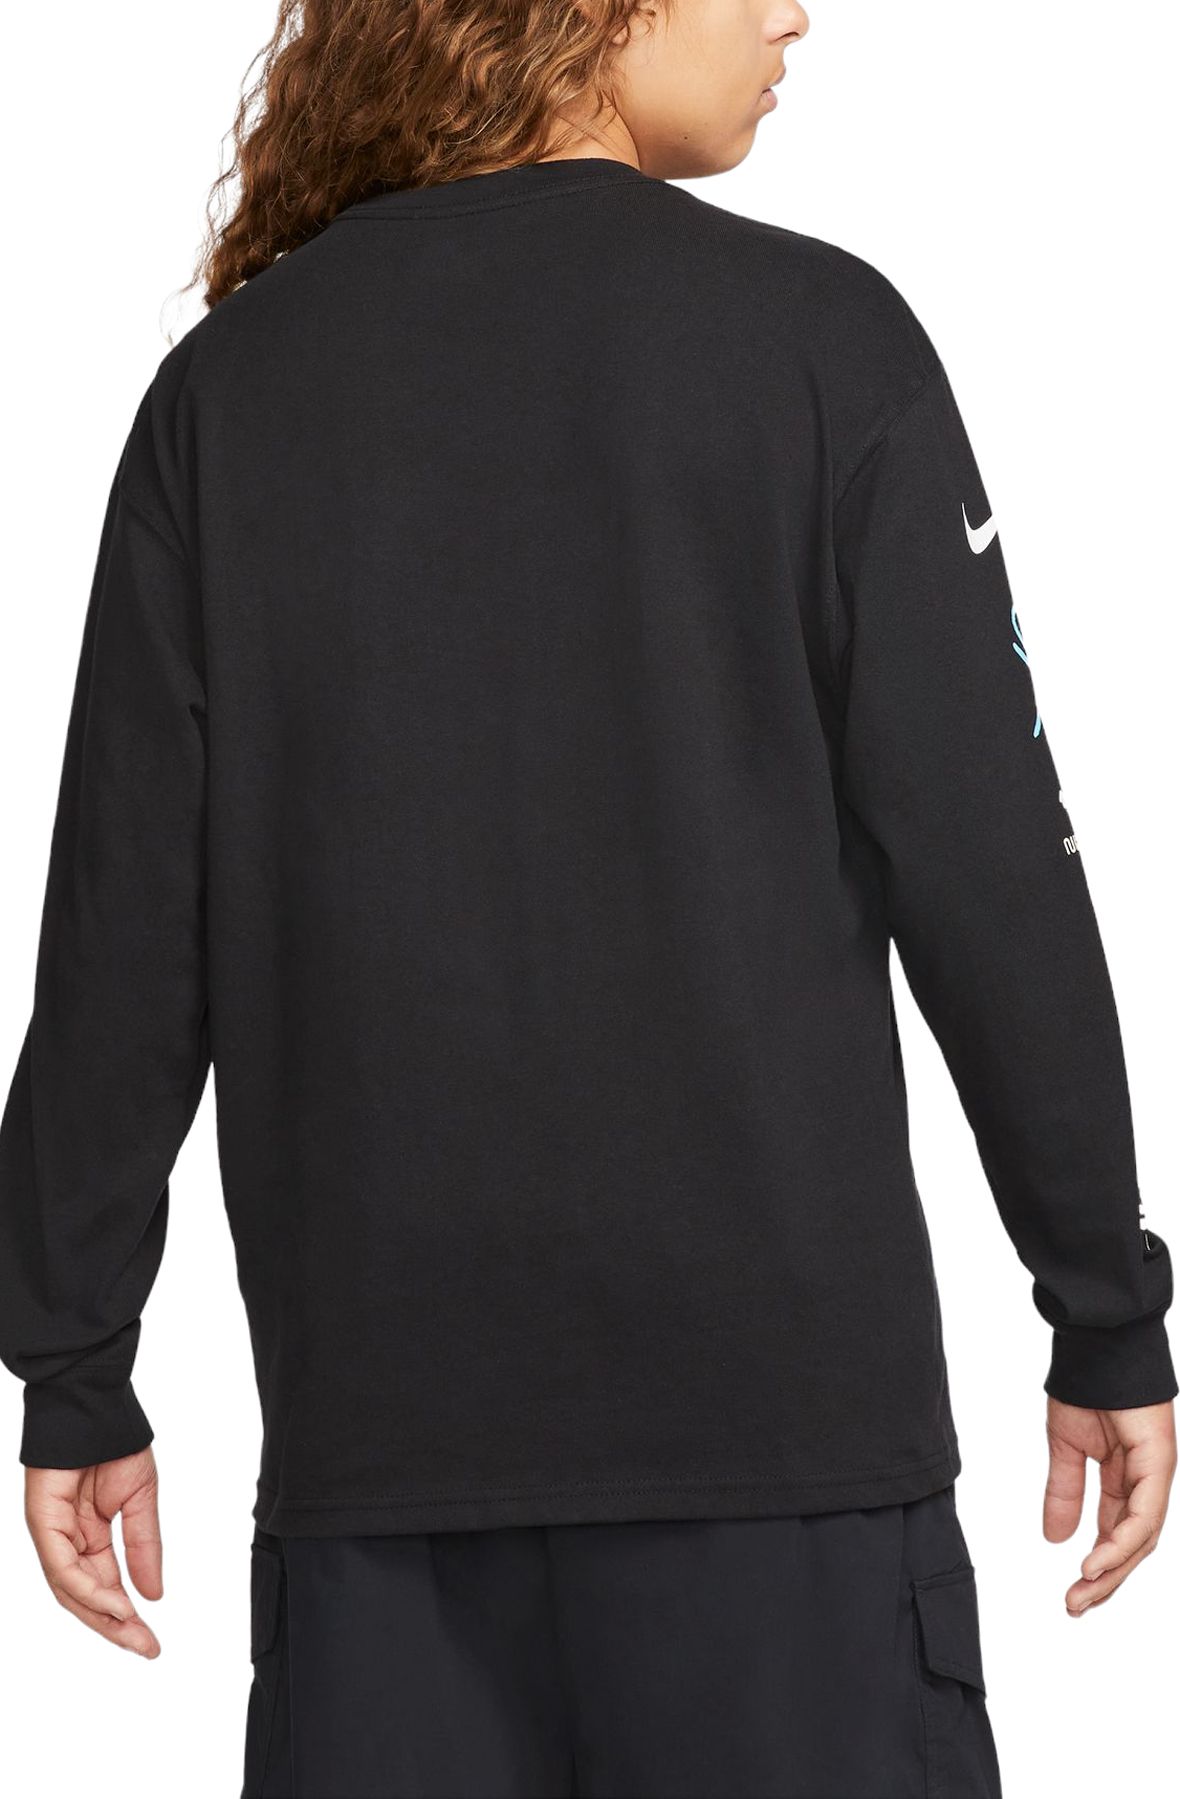 NIKE Sportswear Max90 Long-Sleeve T-Shirt DZ2859 010 - Shiekh